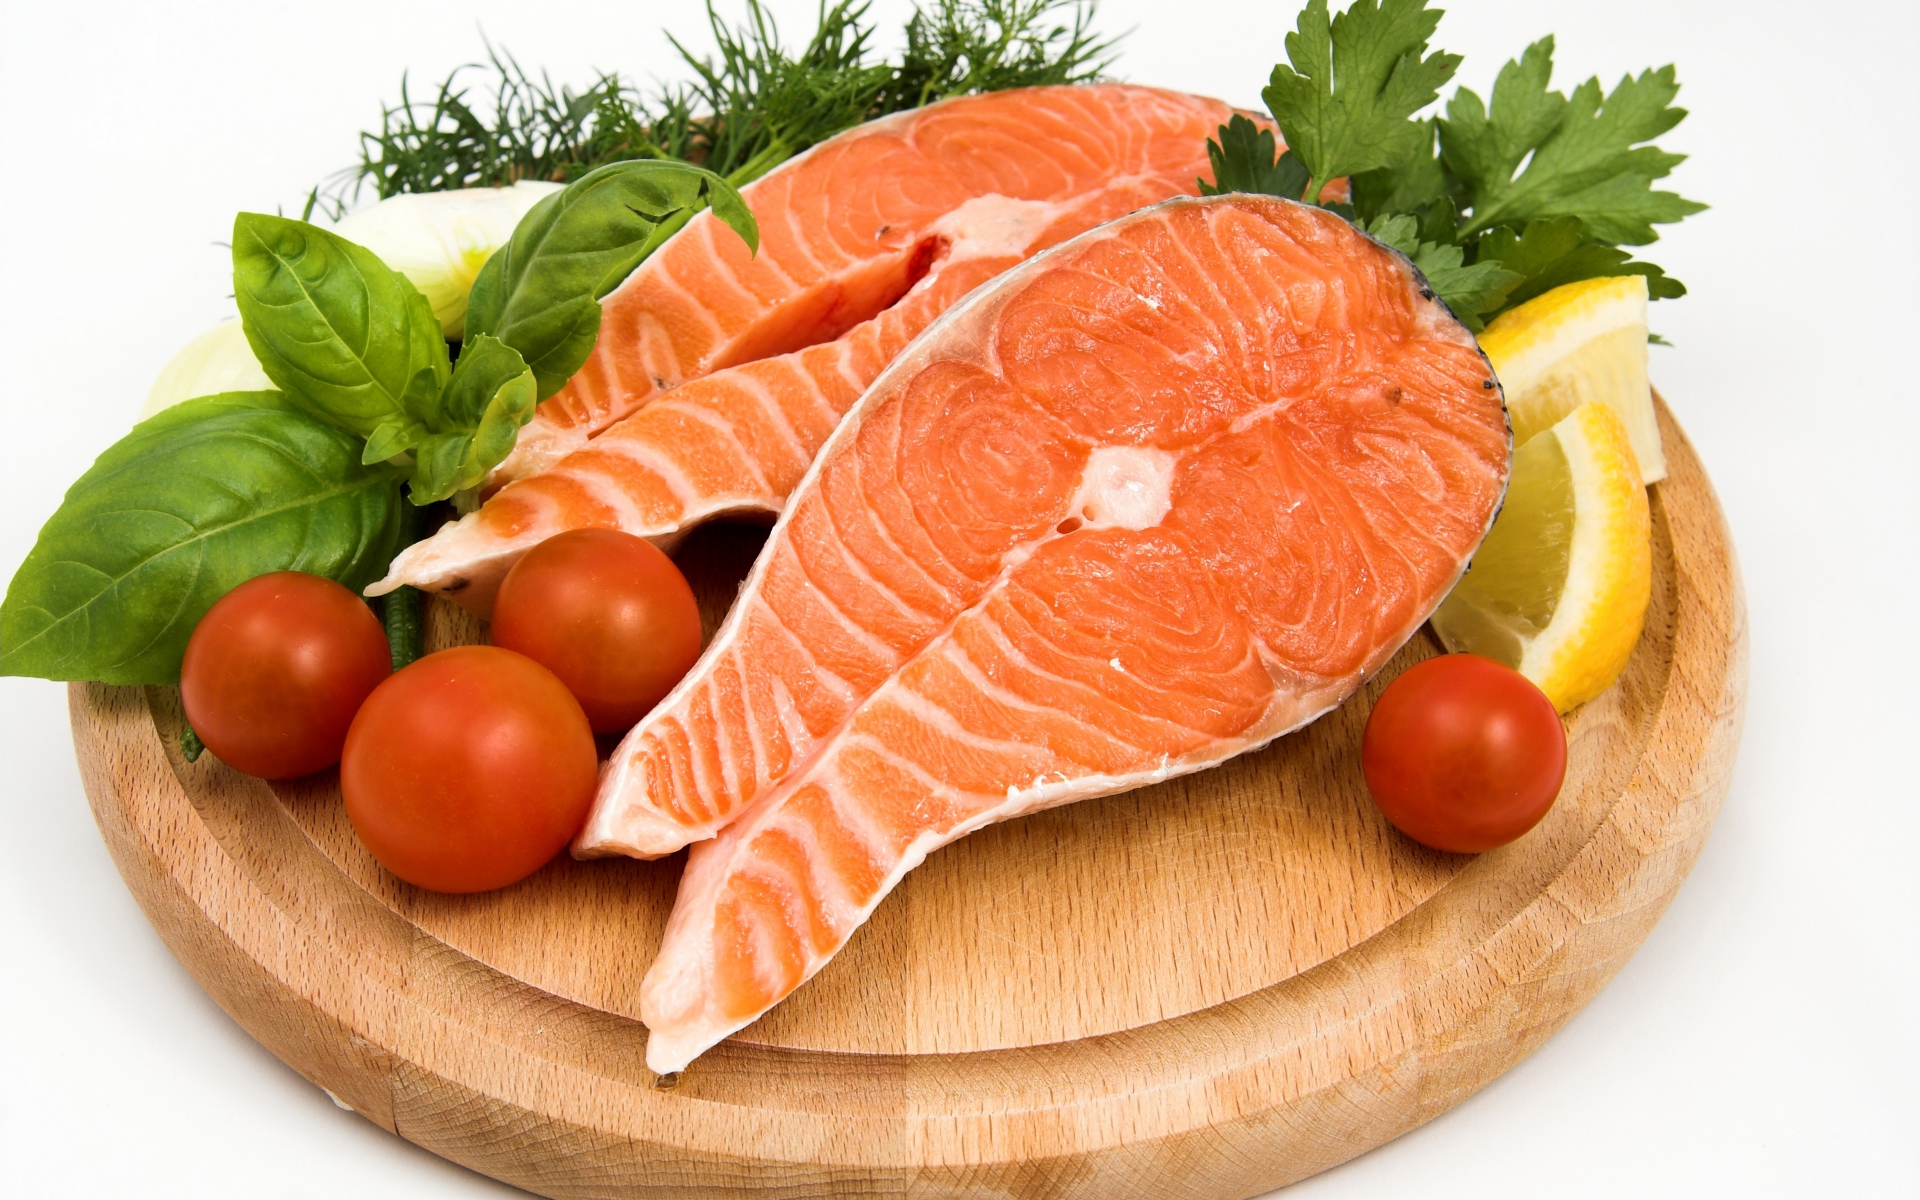 Картинки рыбы, стейк, мясо, овощи, питание фото и обои на рабочий стол